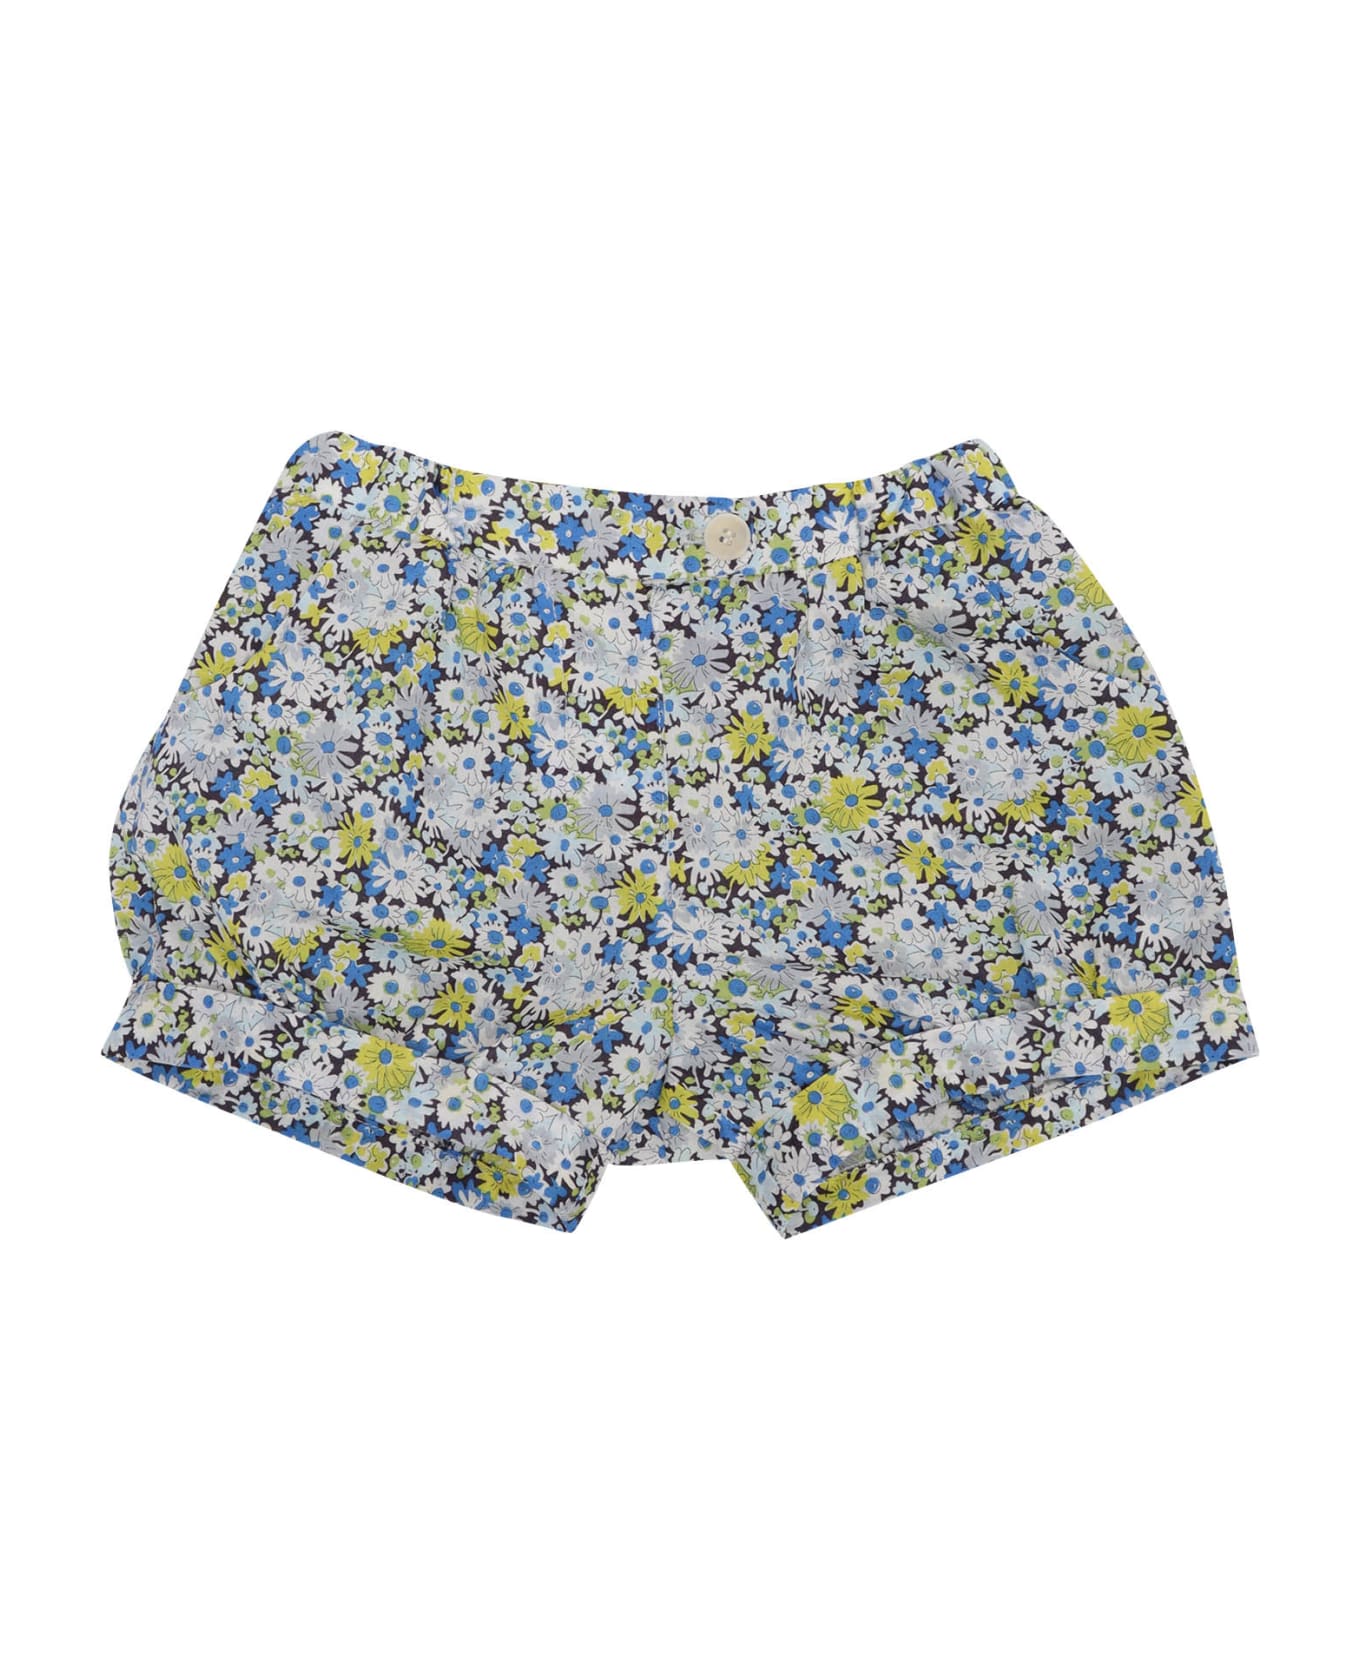 Bonpoint Floreal Shorts - BLUE